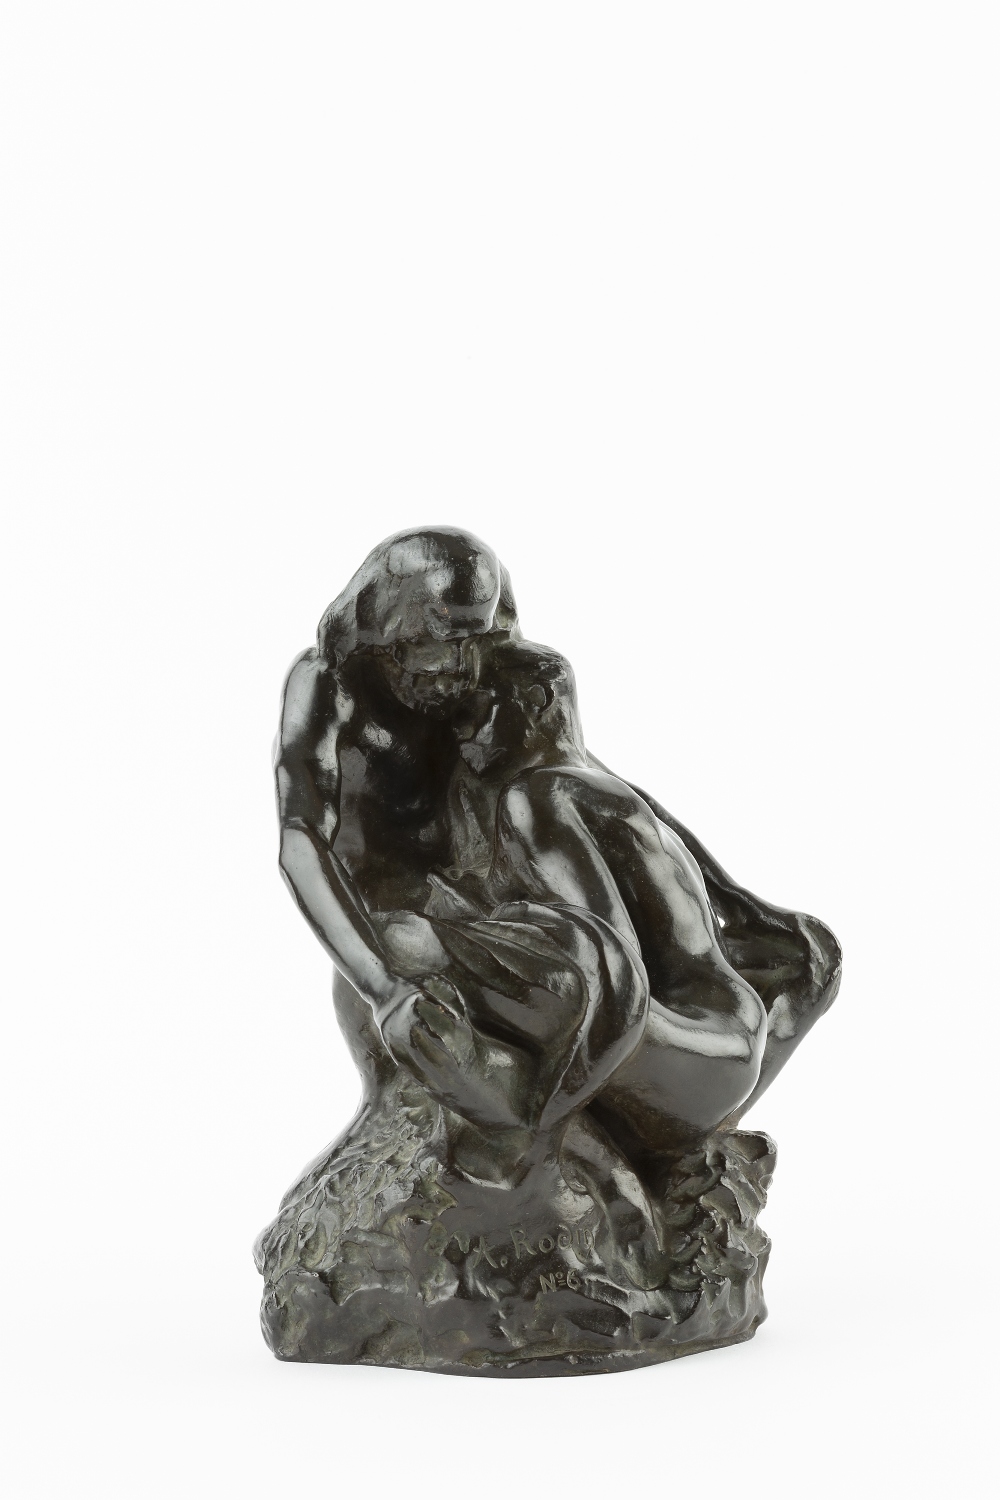 632 - Auguste Rodin (1840-1917)